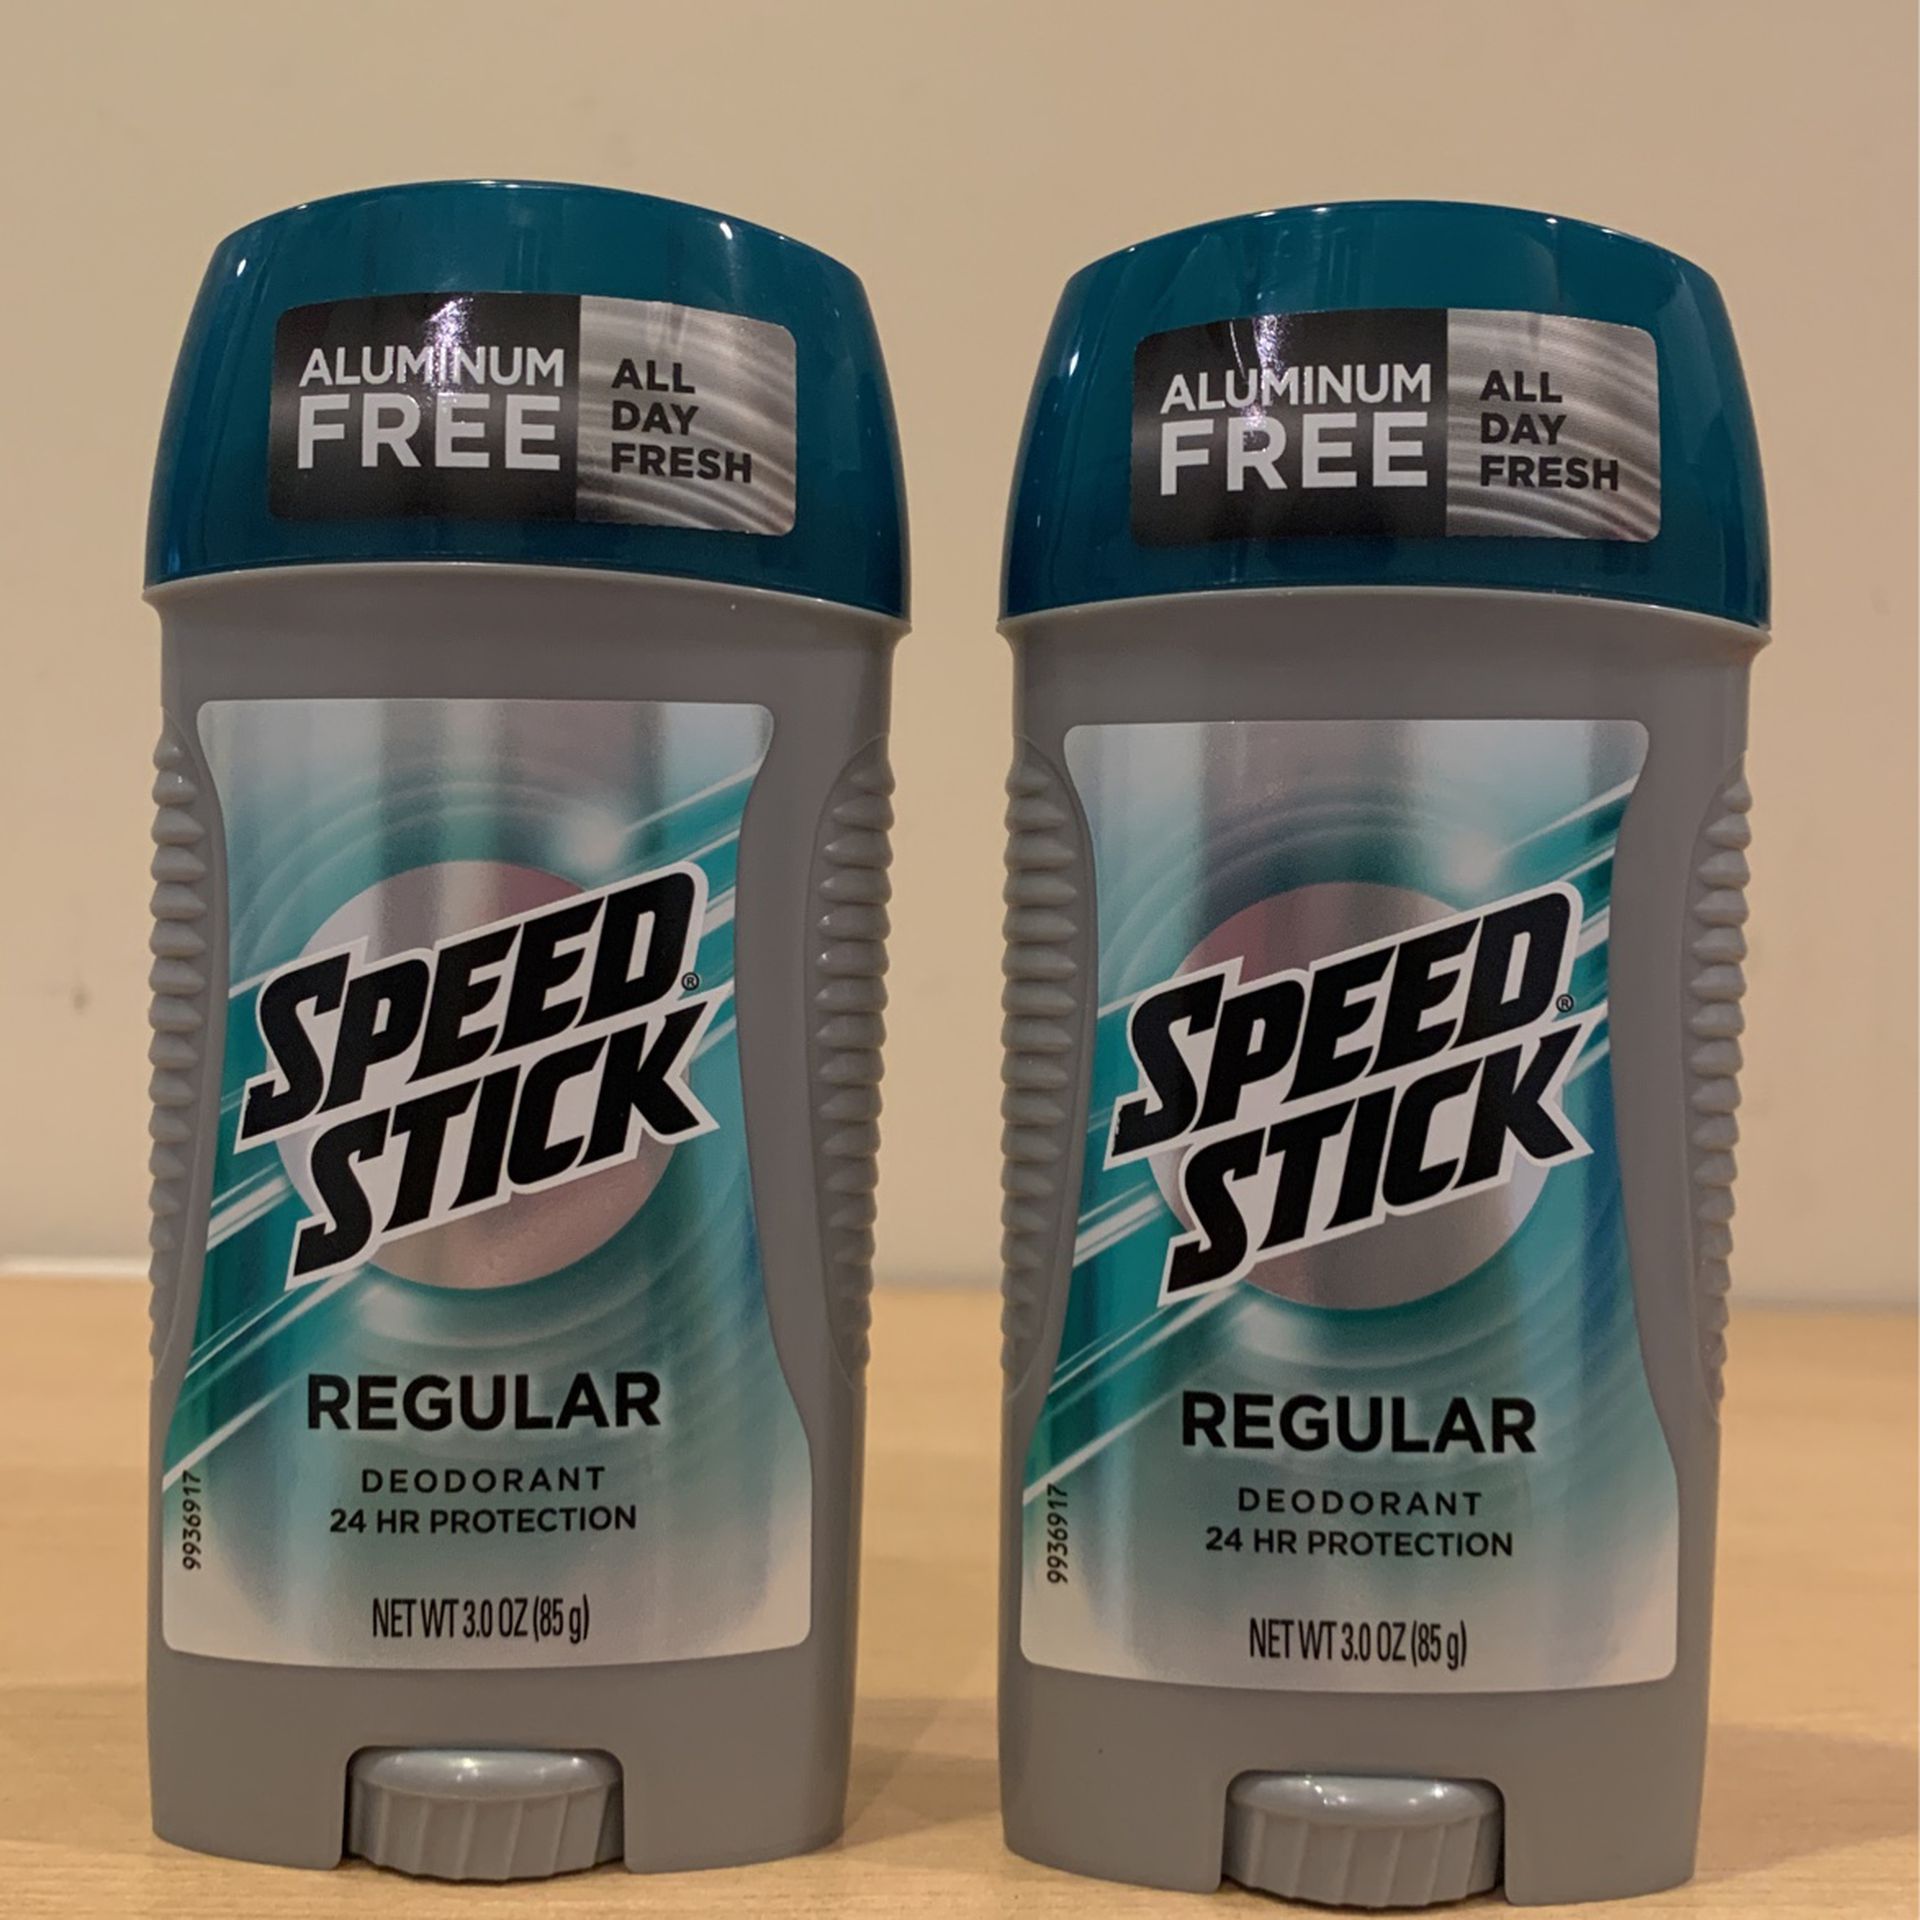 Speed Stick deodorant 3 oz: 2/$3